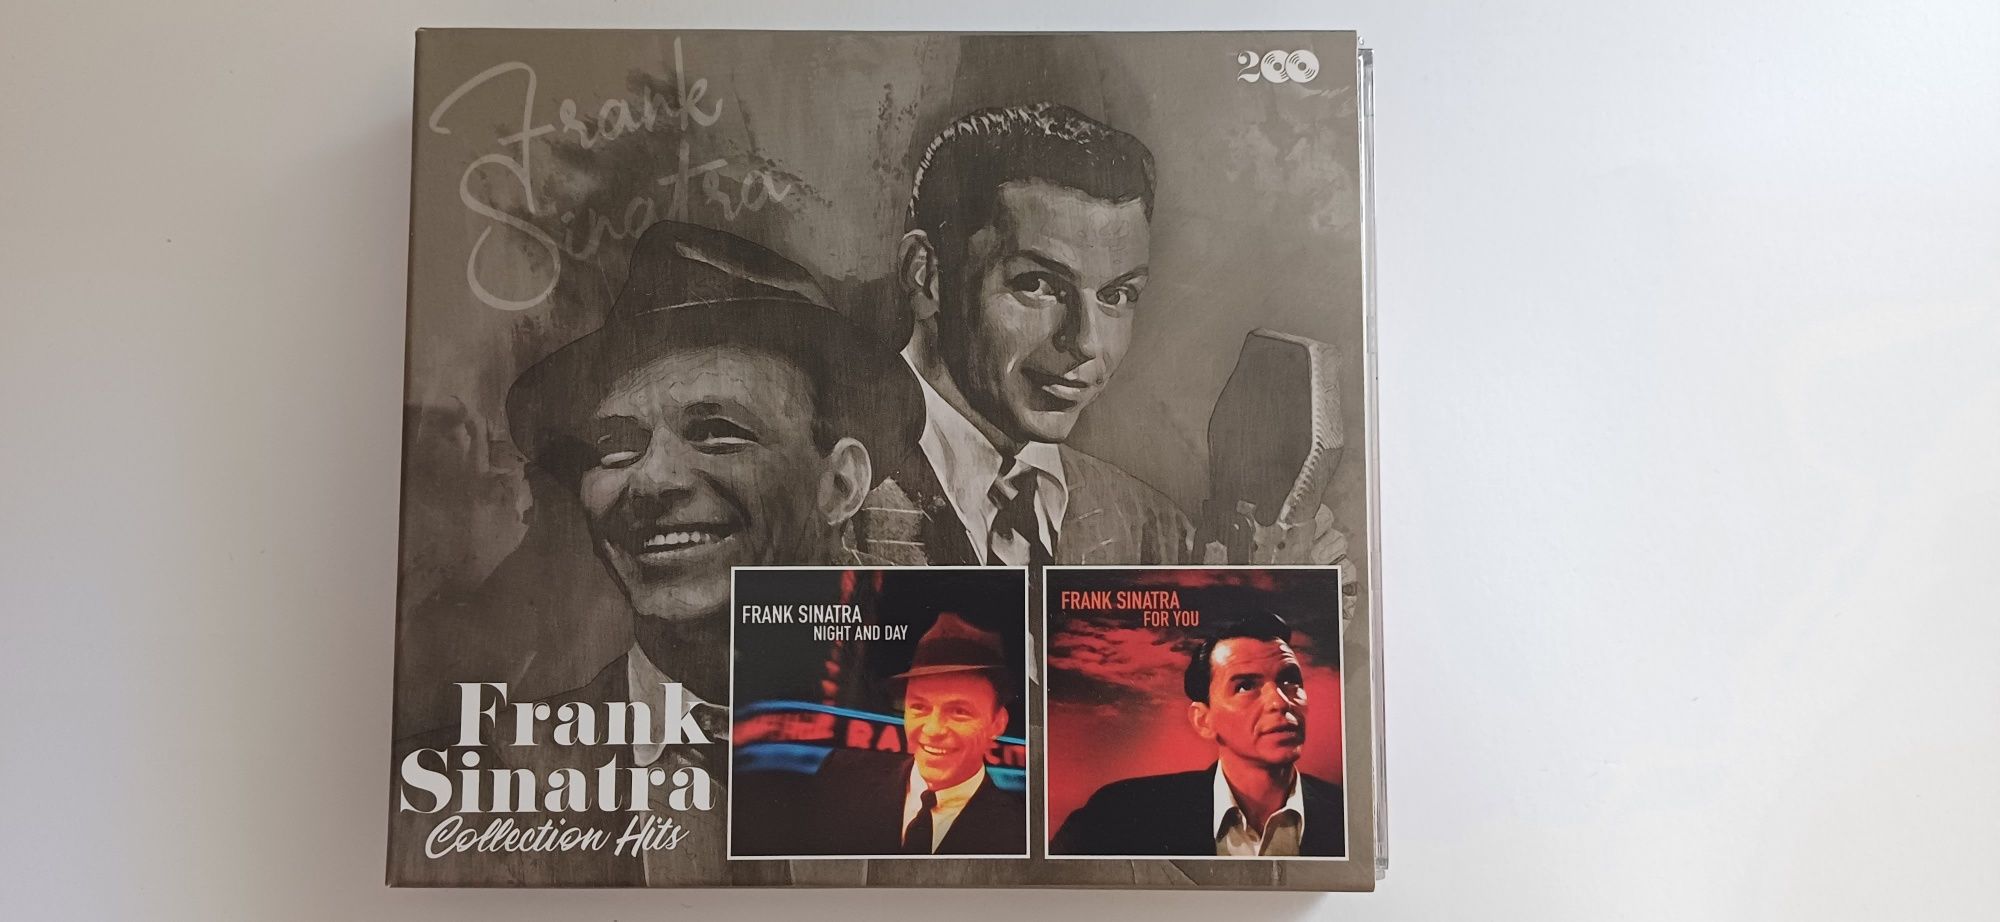 Frank Sinatra Collection Hits 2CD